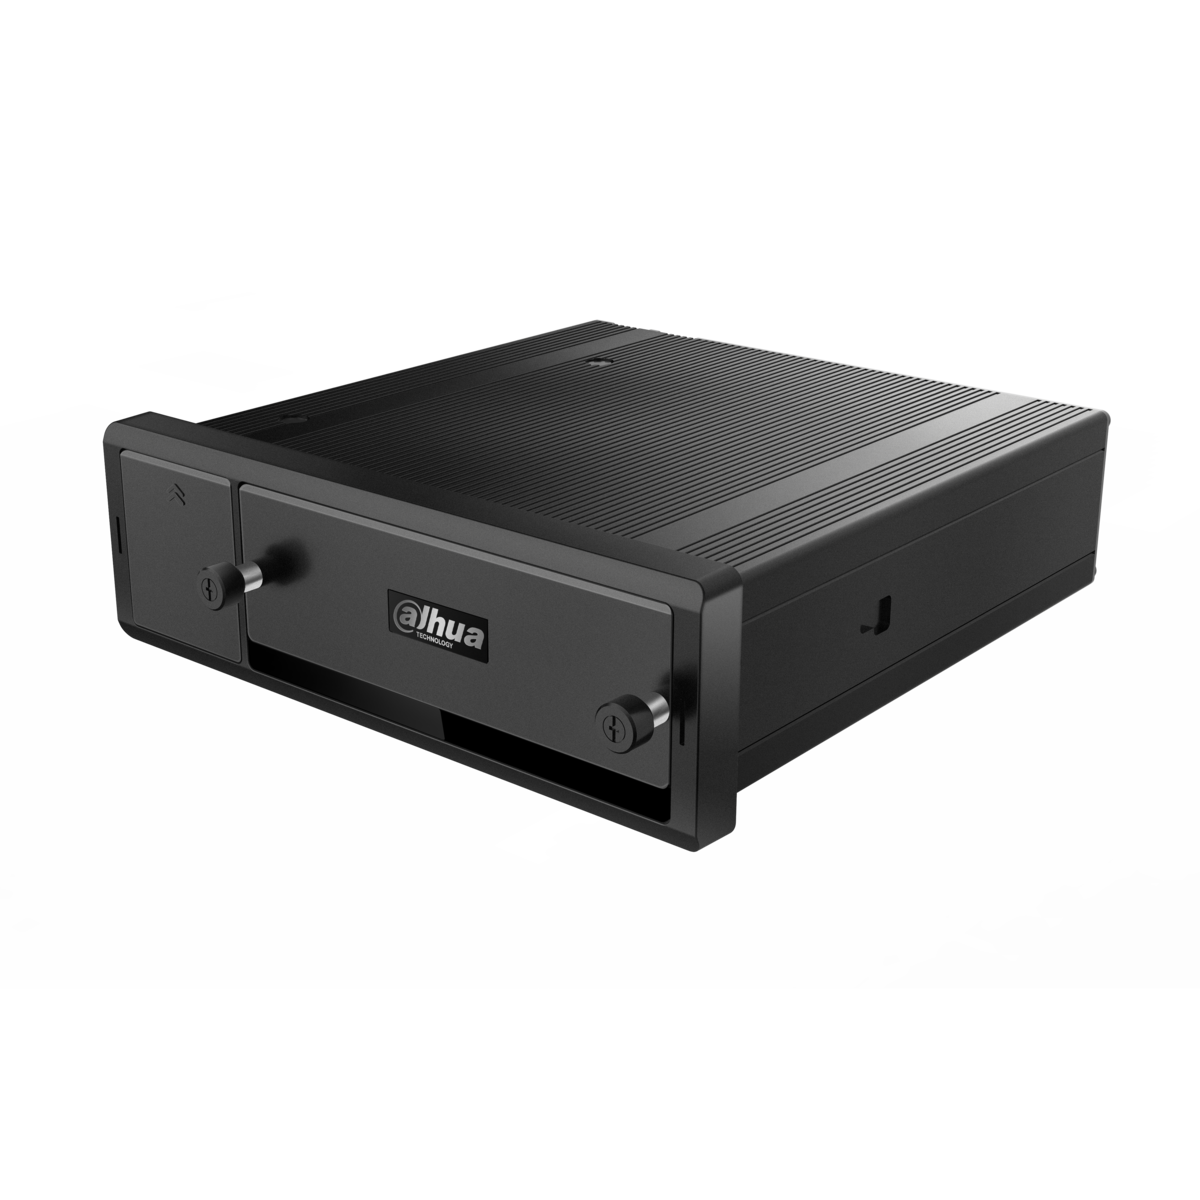 DAHUA MOBILE SERIES 4CH+4IP CH AI XVR UPTO 2MP/1080P 1x SATA HDD PORT UP TO 2TB EACH 6-36VDC